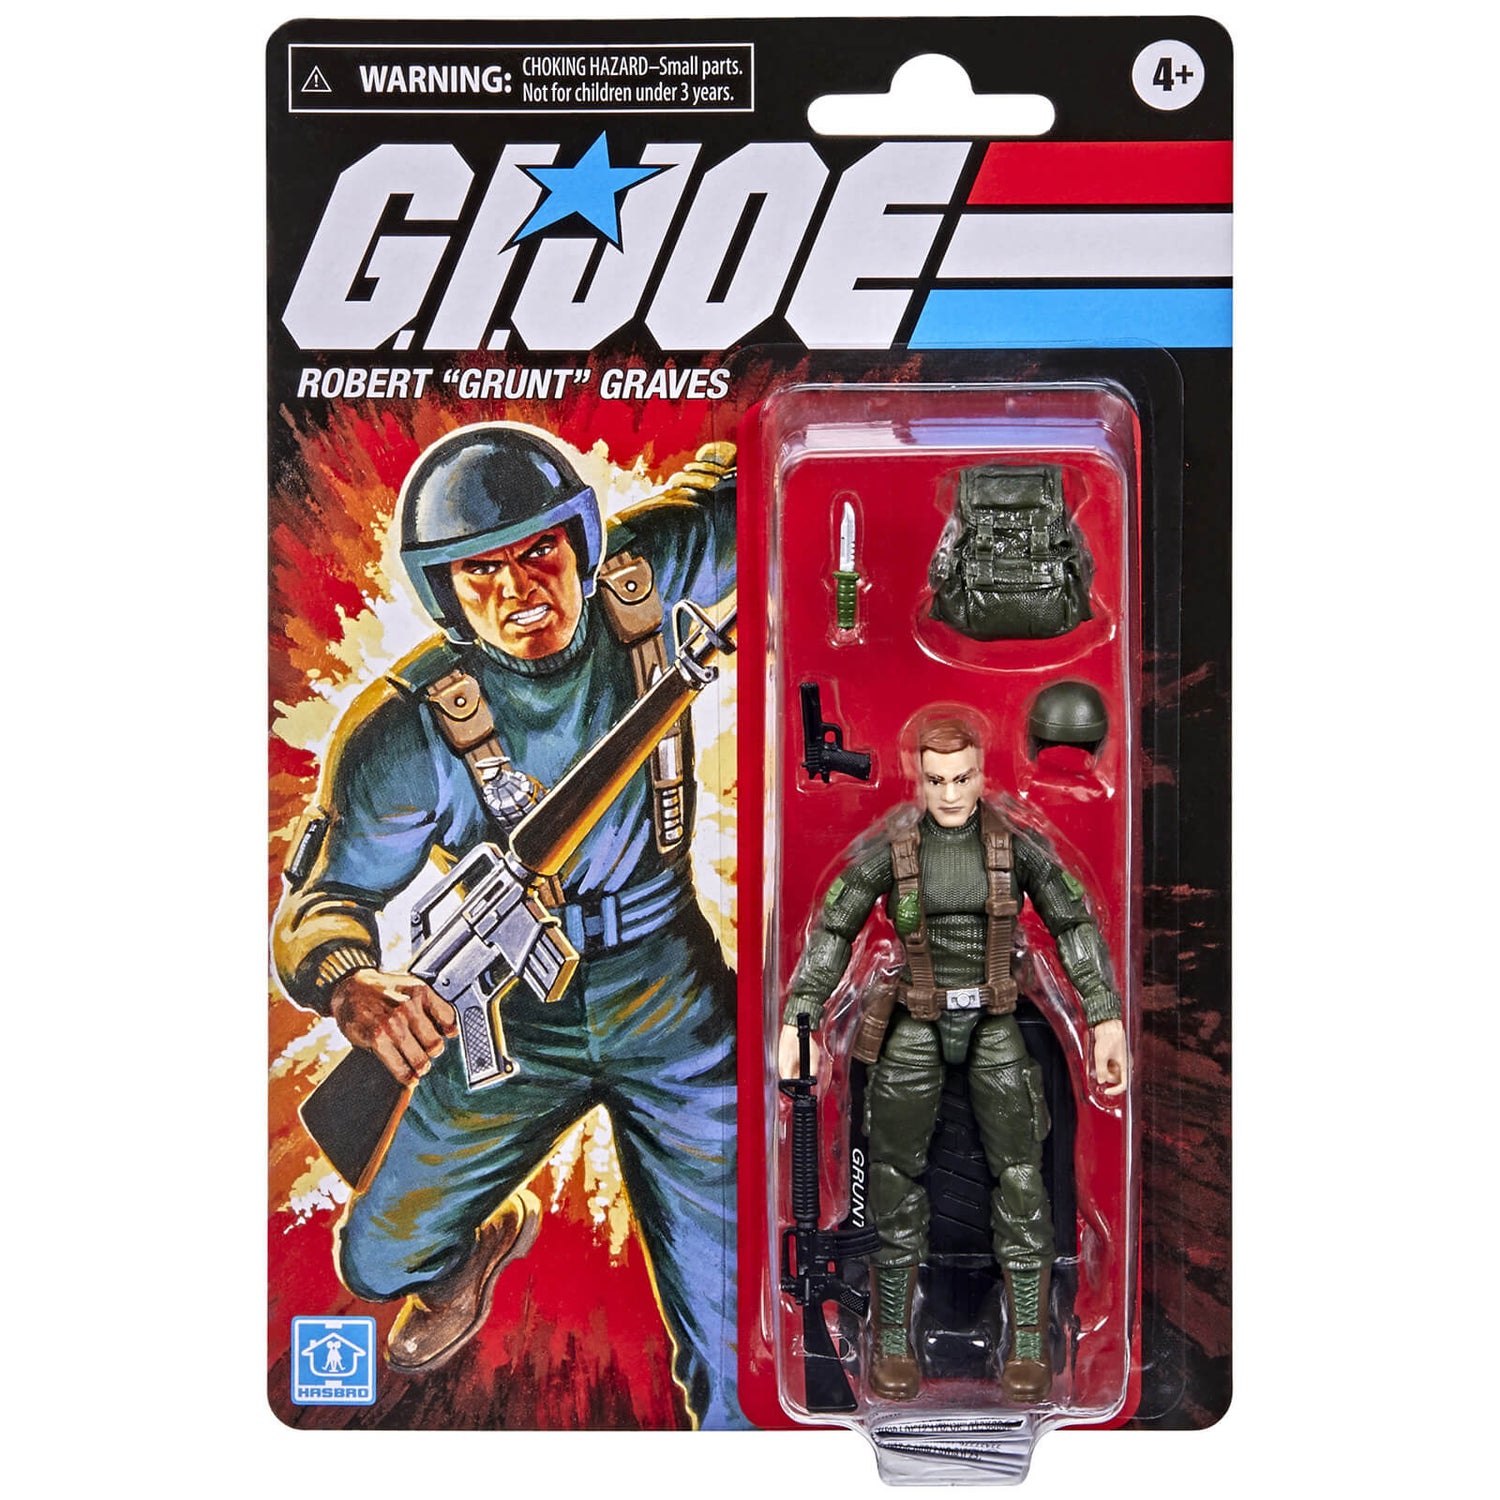 Hasbro G.I. Joe Retro Collection Robert “Grunt” Graves Action Figure